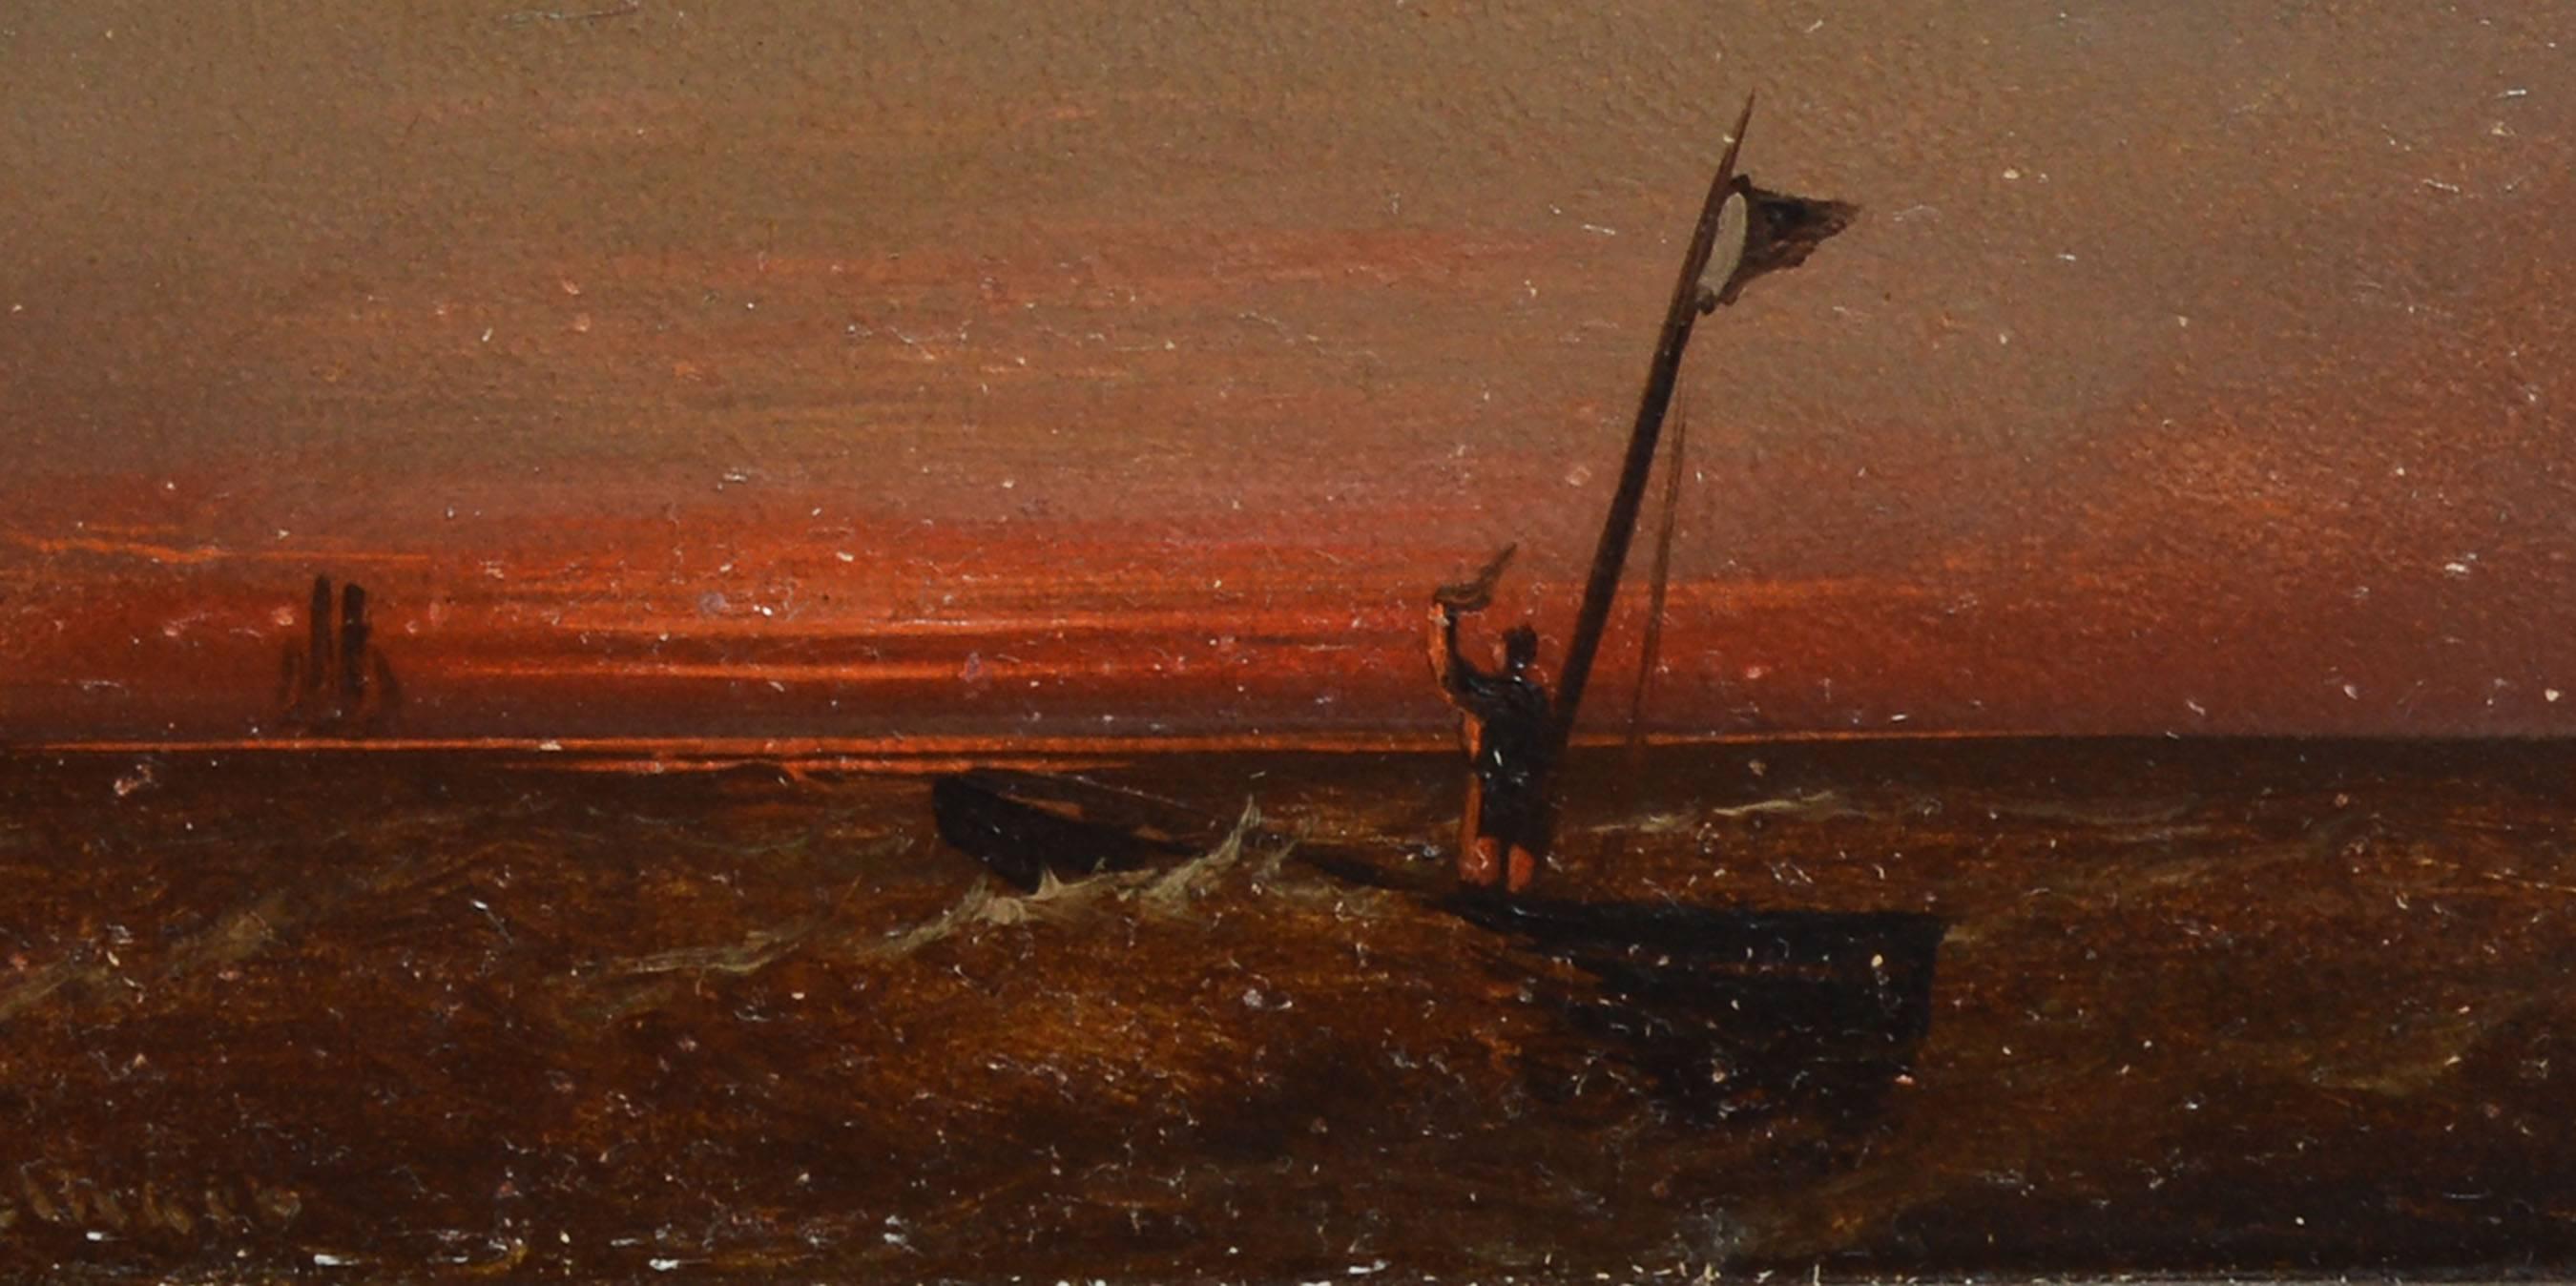 Sunset Sail by Alexander Charles Stuart 3